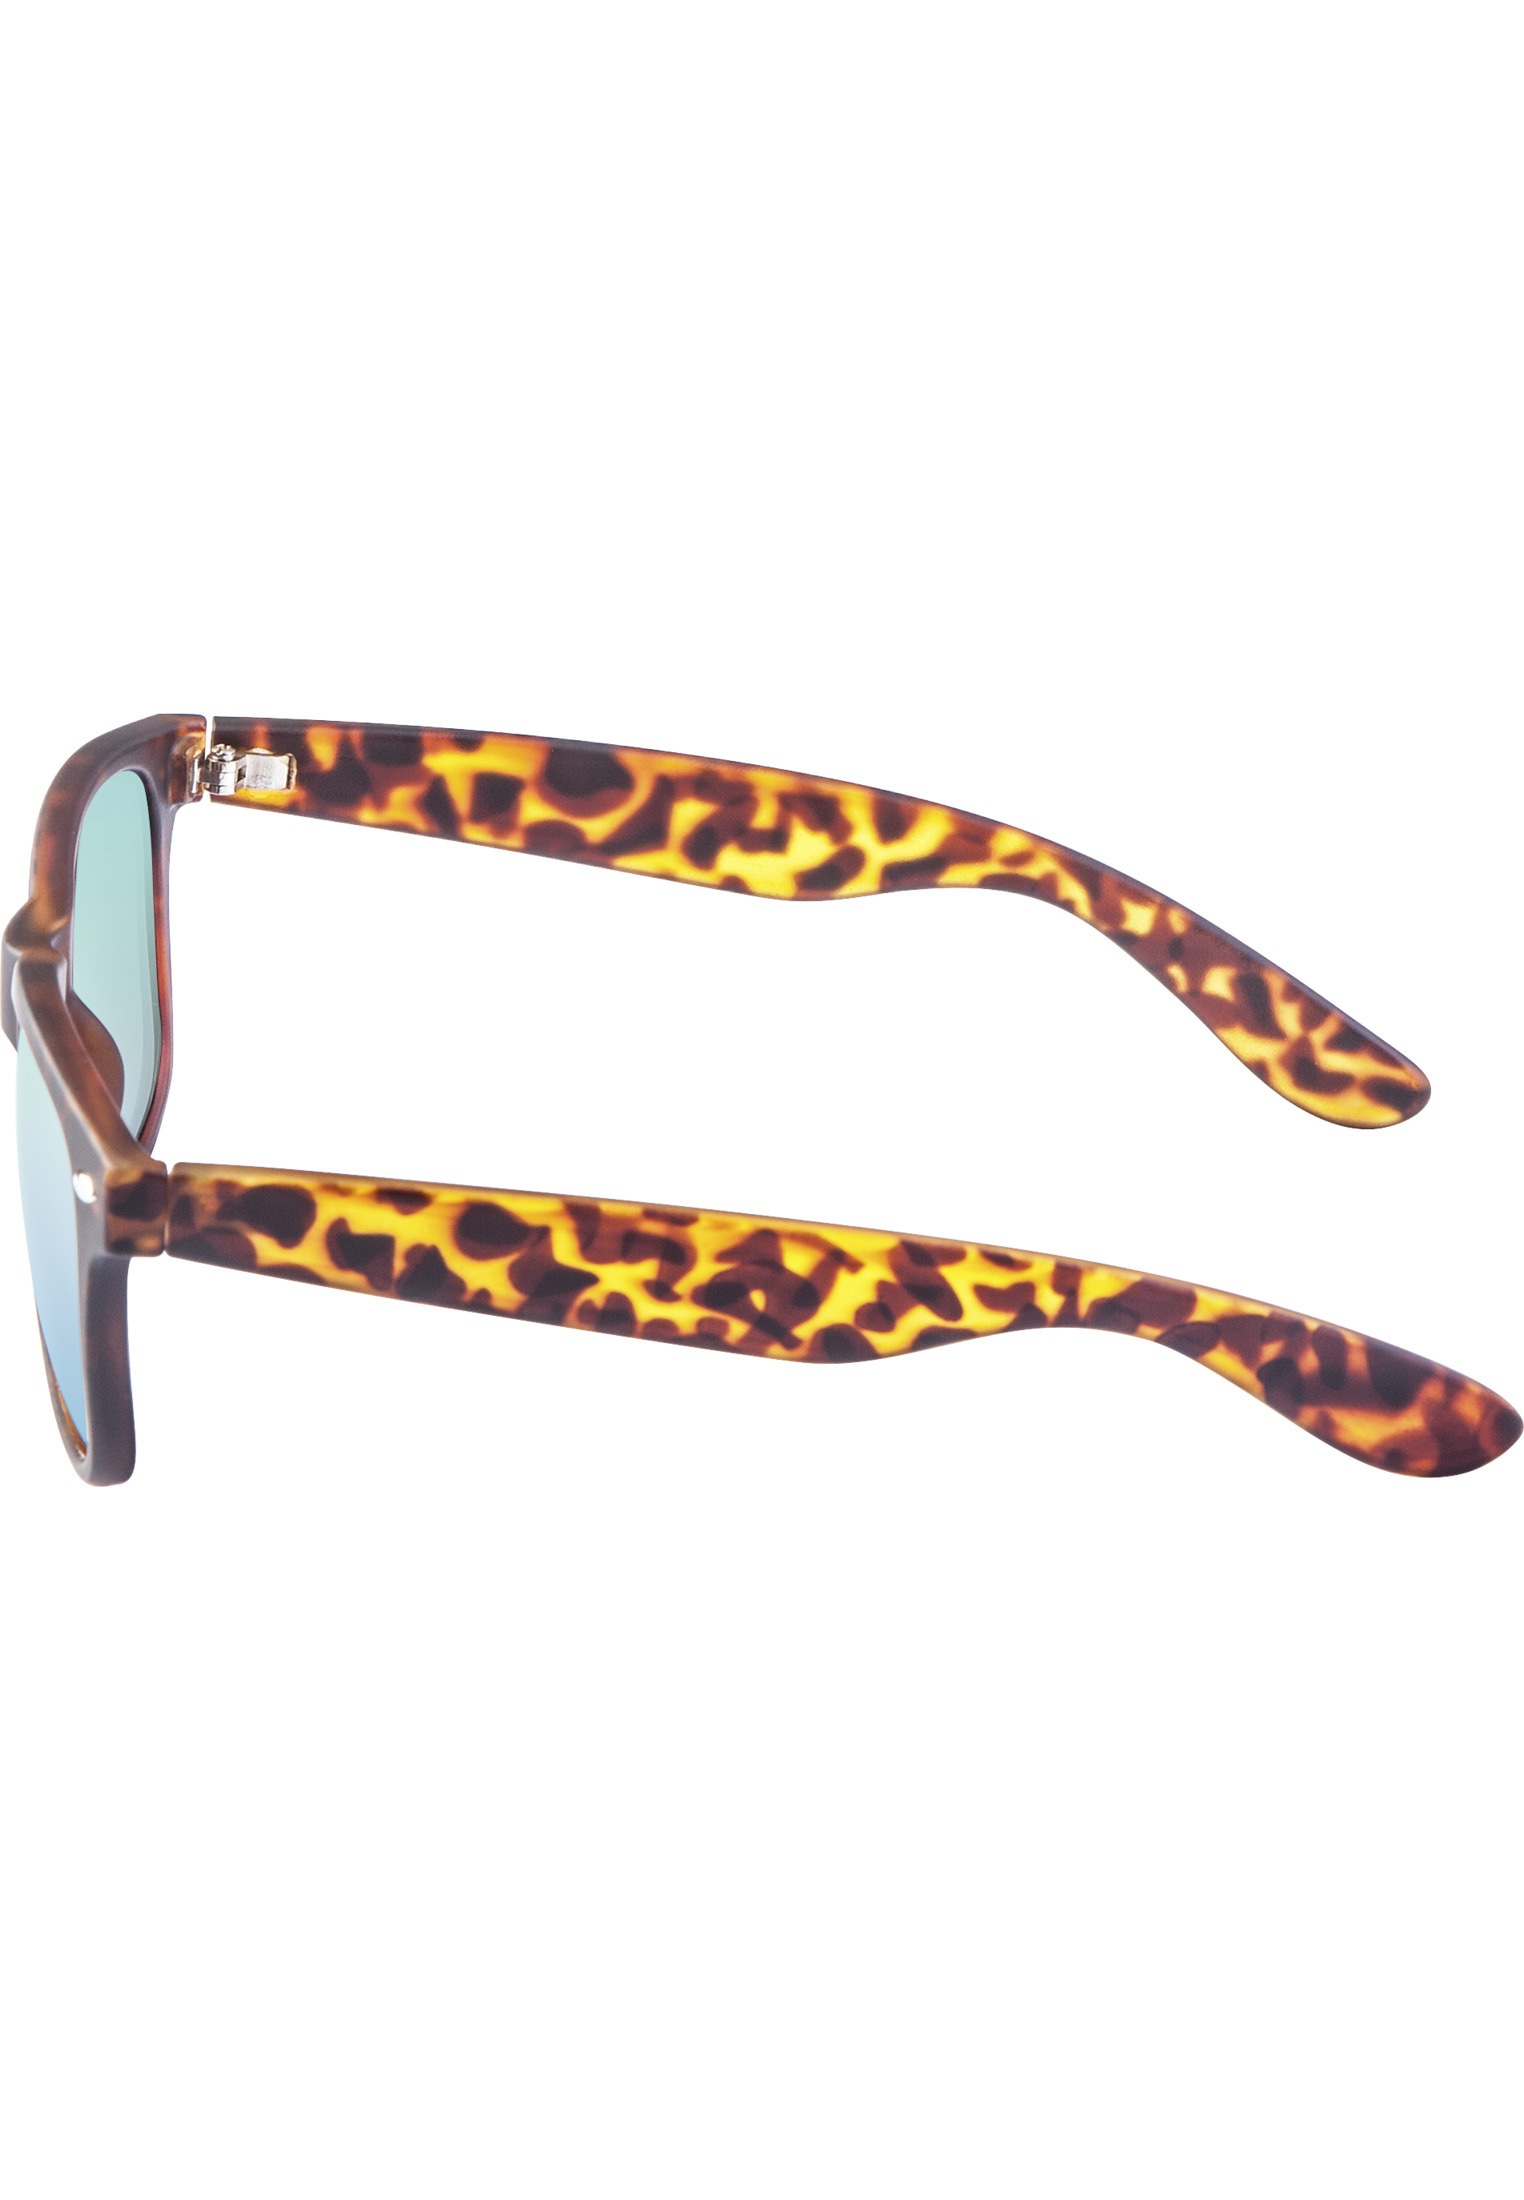 für »Accessoires bestellen BAUR Likoma Sonnenbrille MSTRDS Youth« Sunglasses |